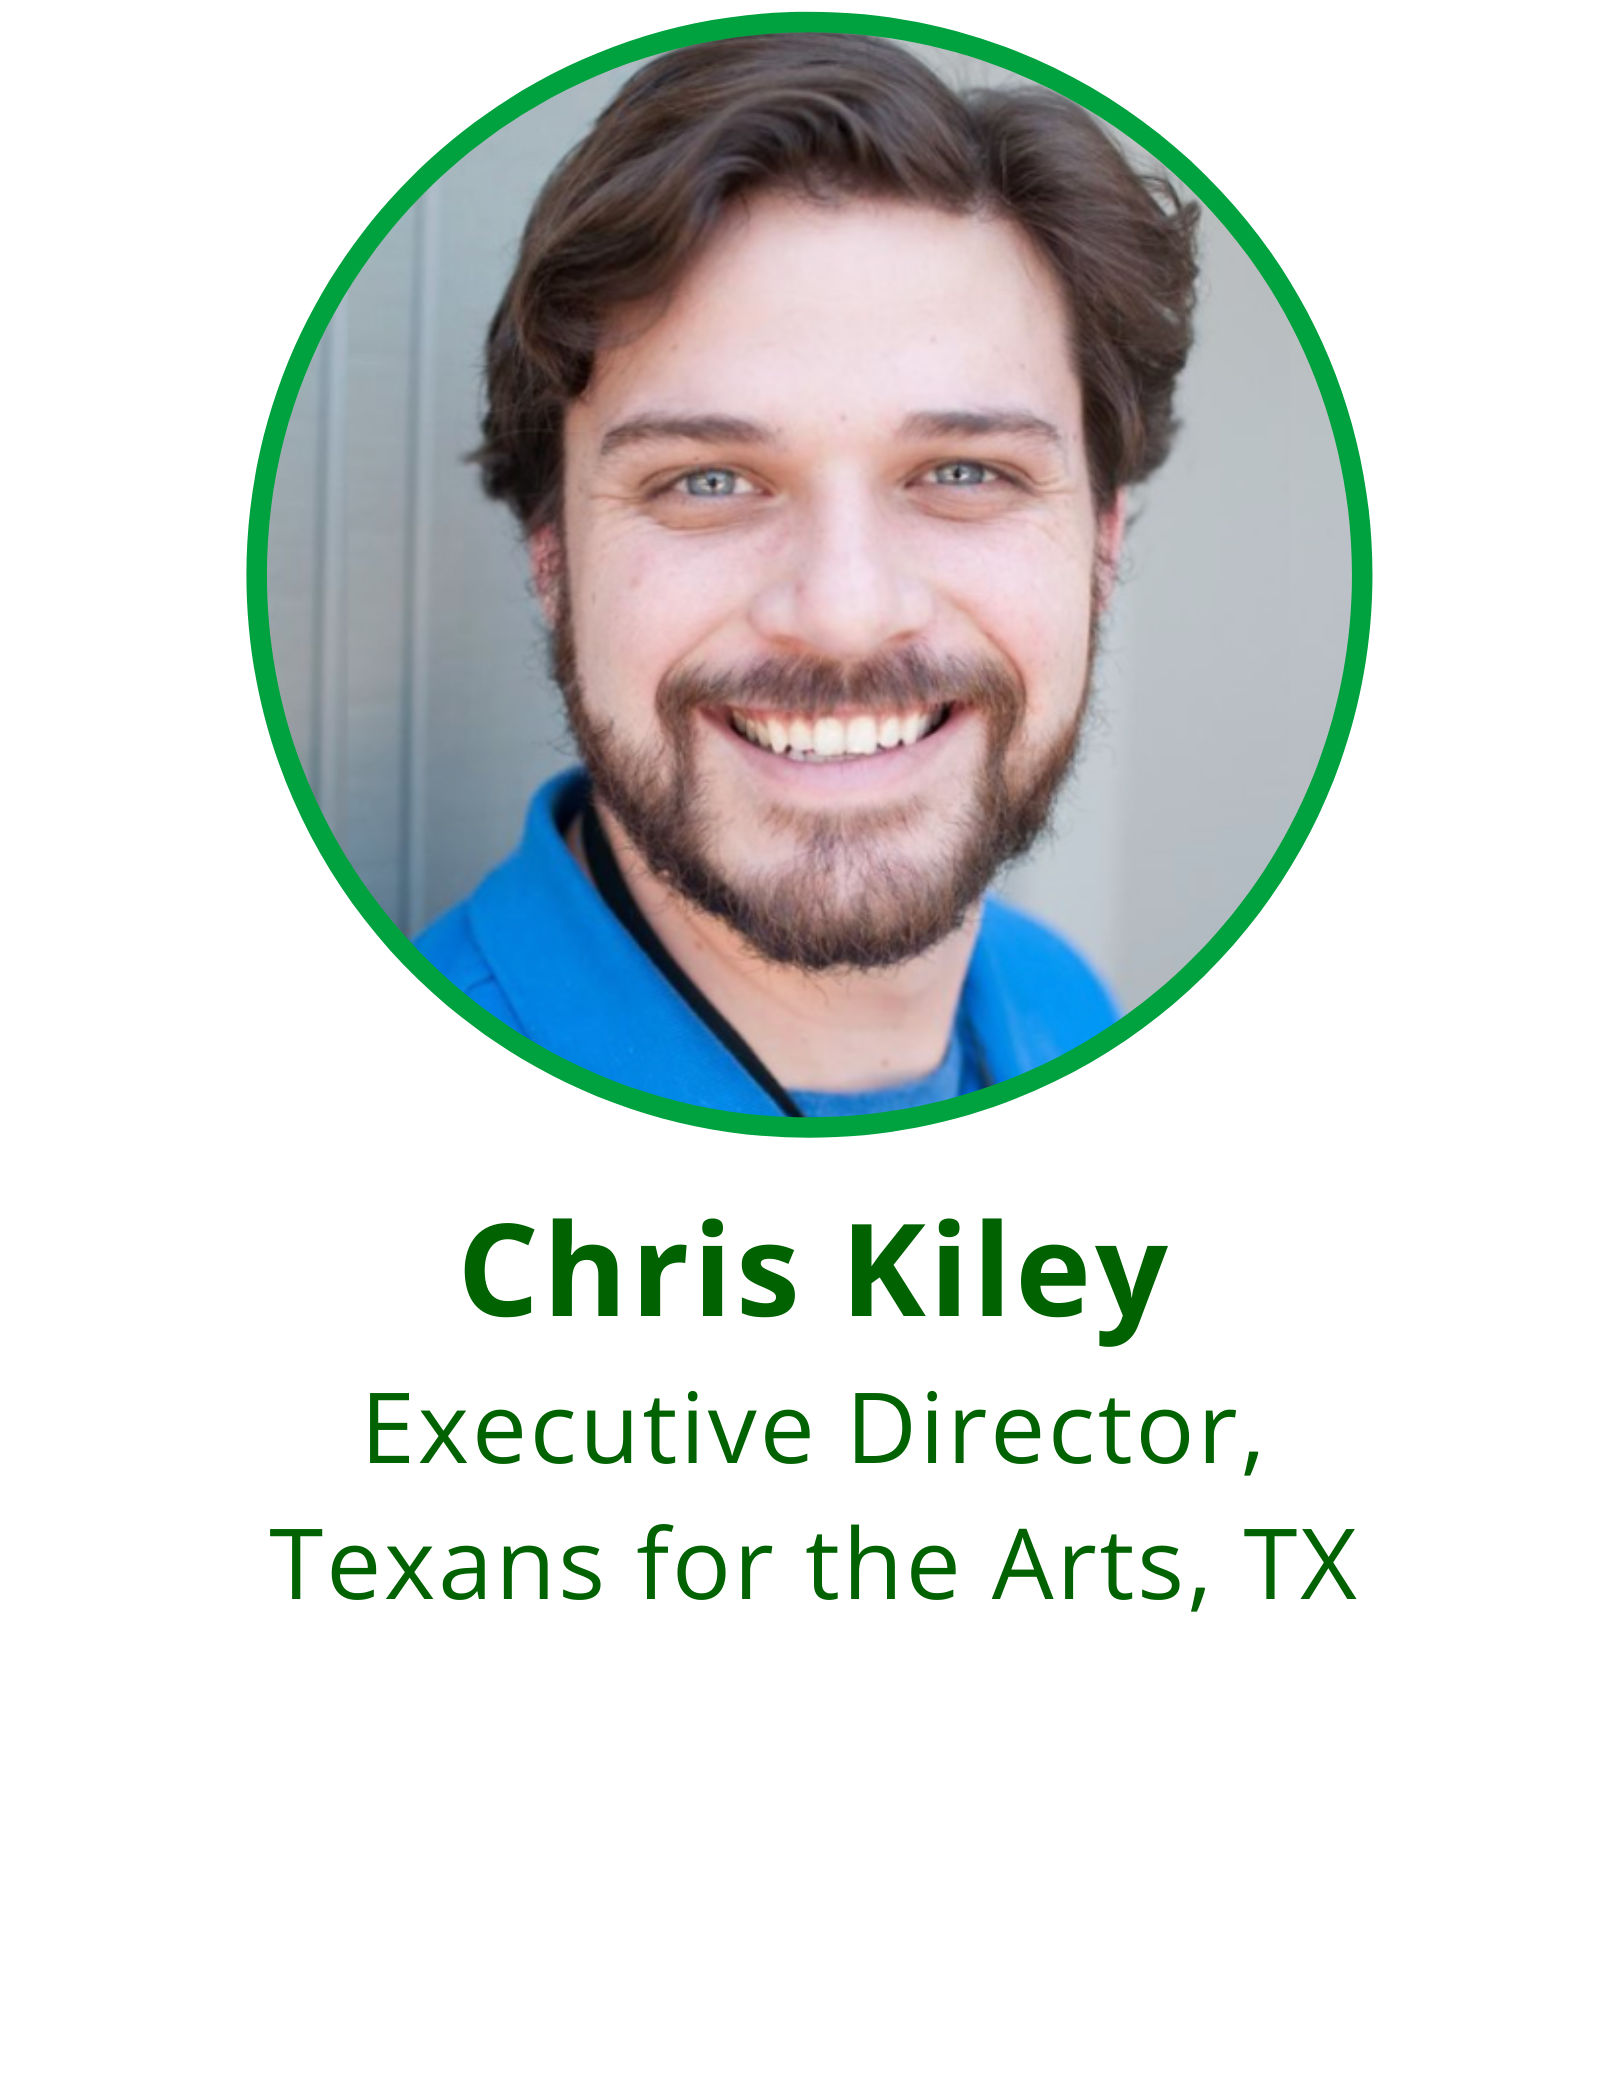 Chris Kiley, Executive Director of Texans for the Arts